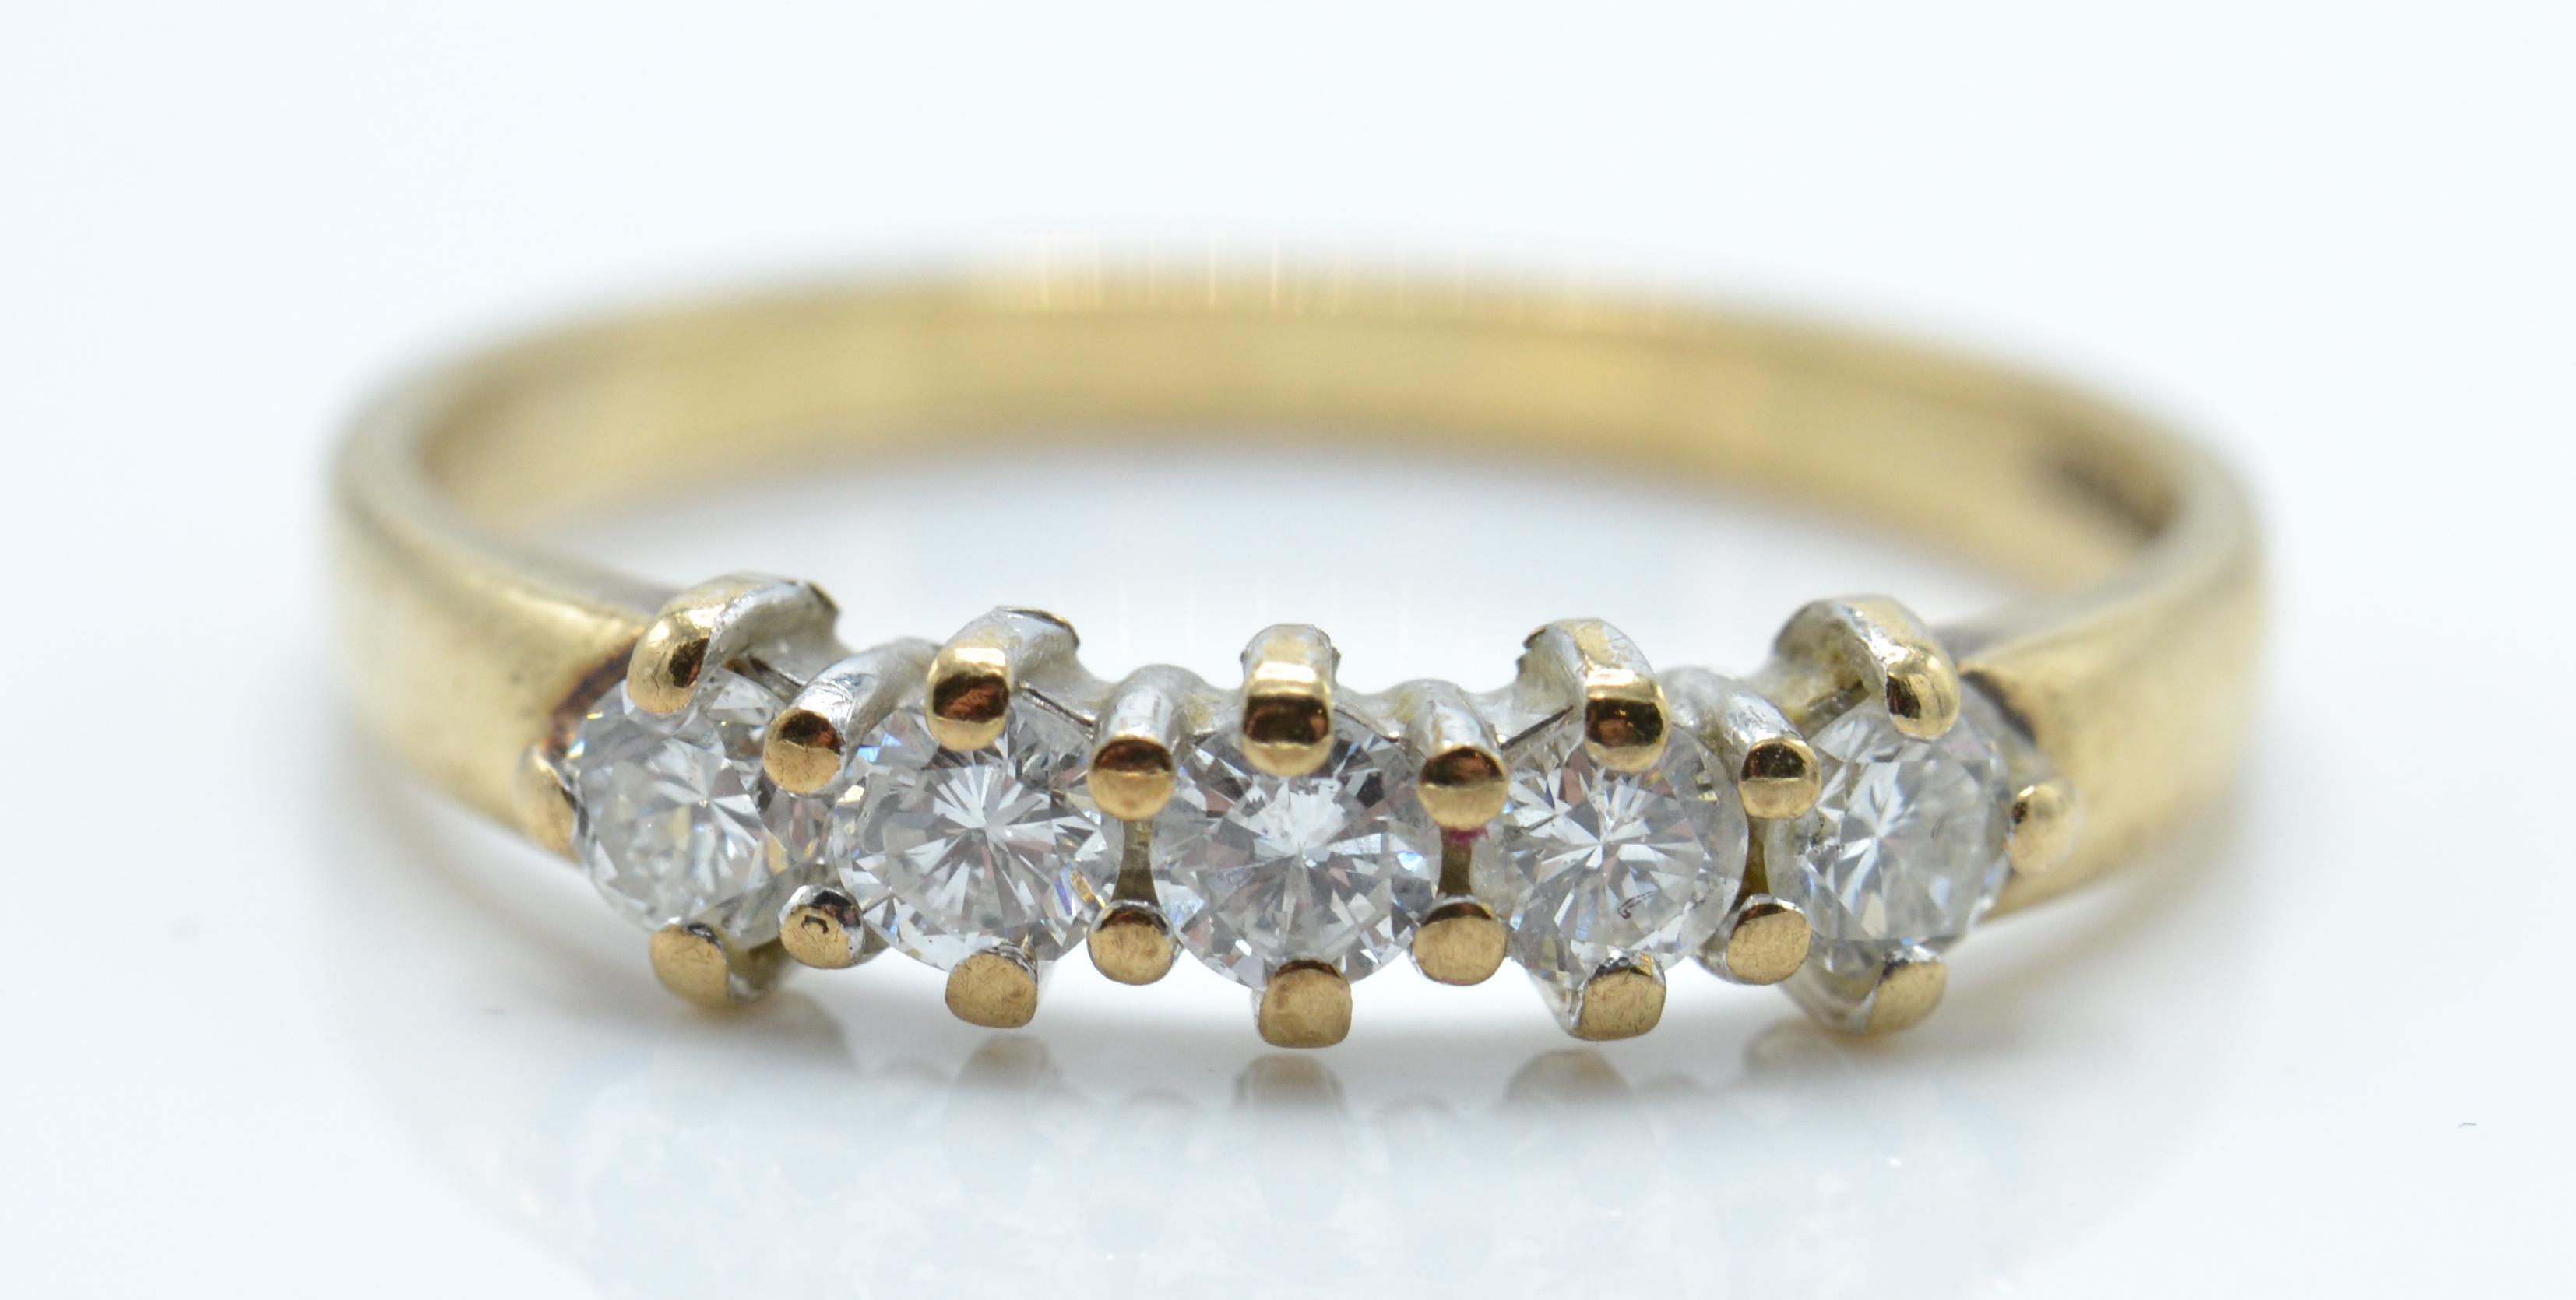 A Hallmarked 9ct Gold 5 Stone Diamond Ring - Image 4 of 4